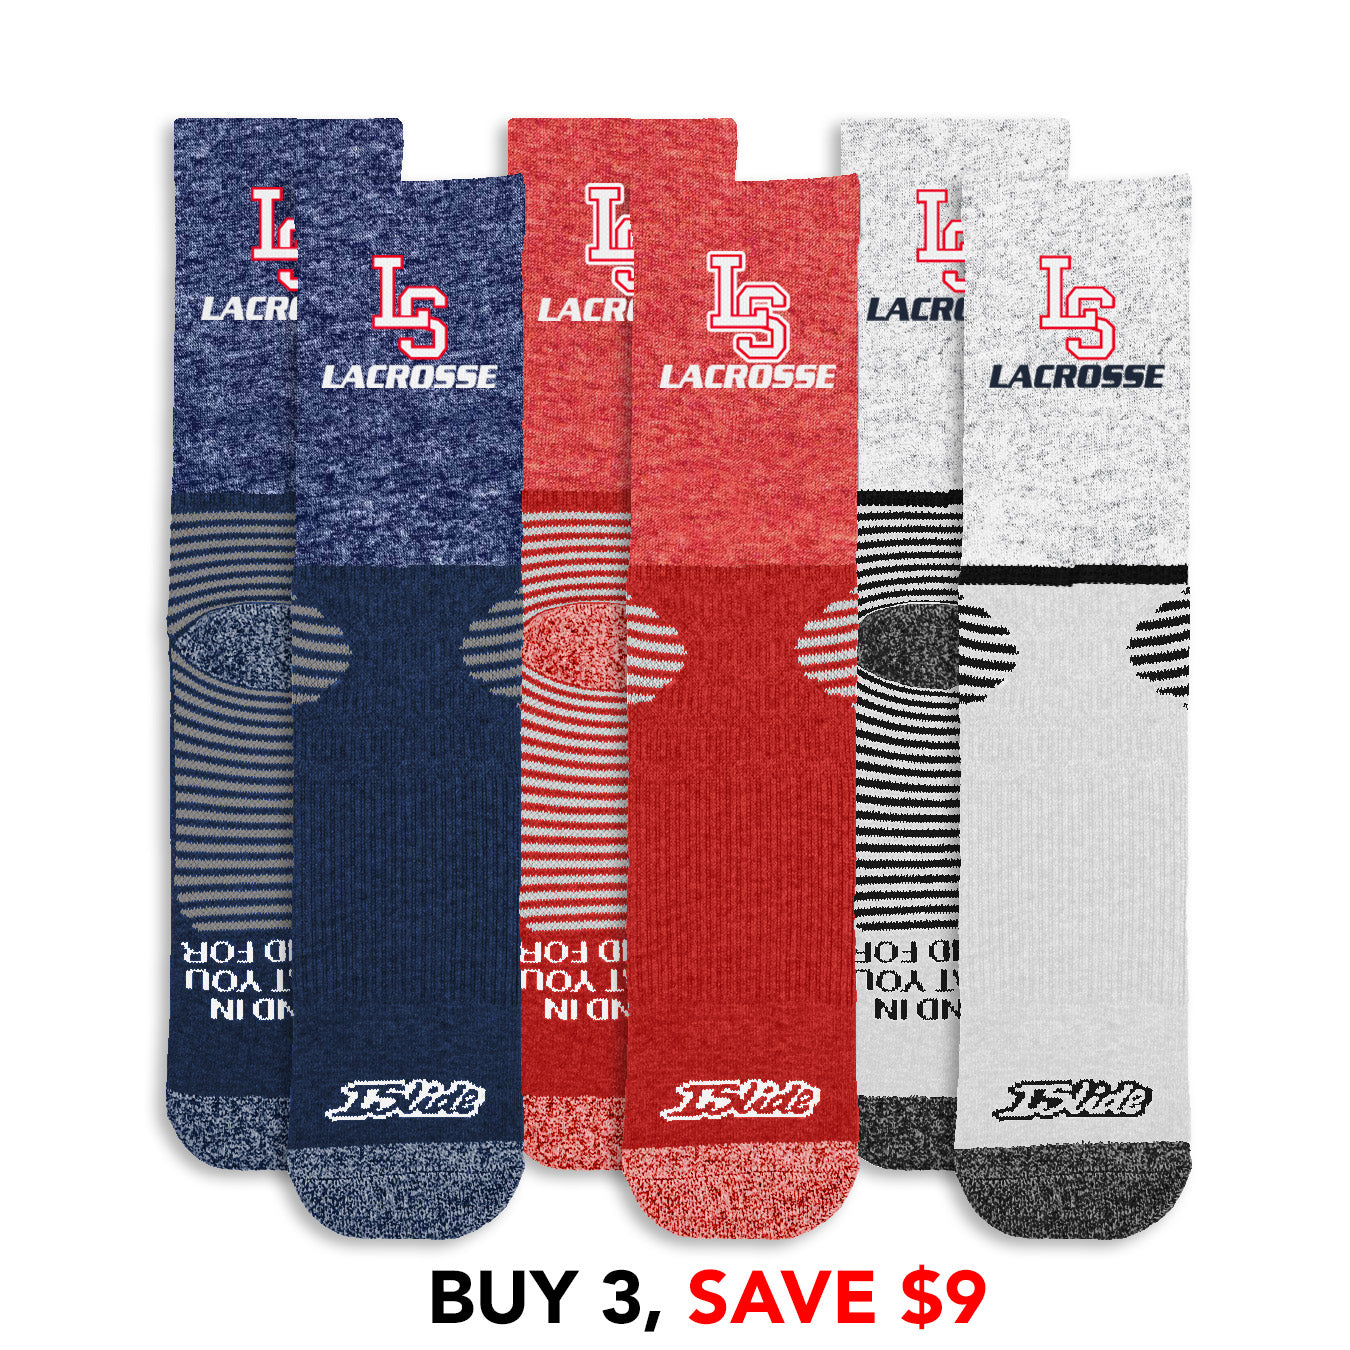 LS Lacrosse Primary Socks Bundle